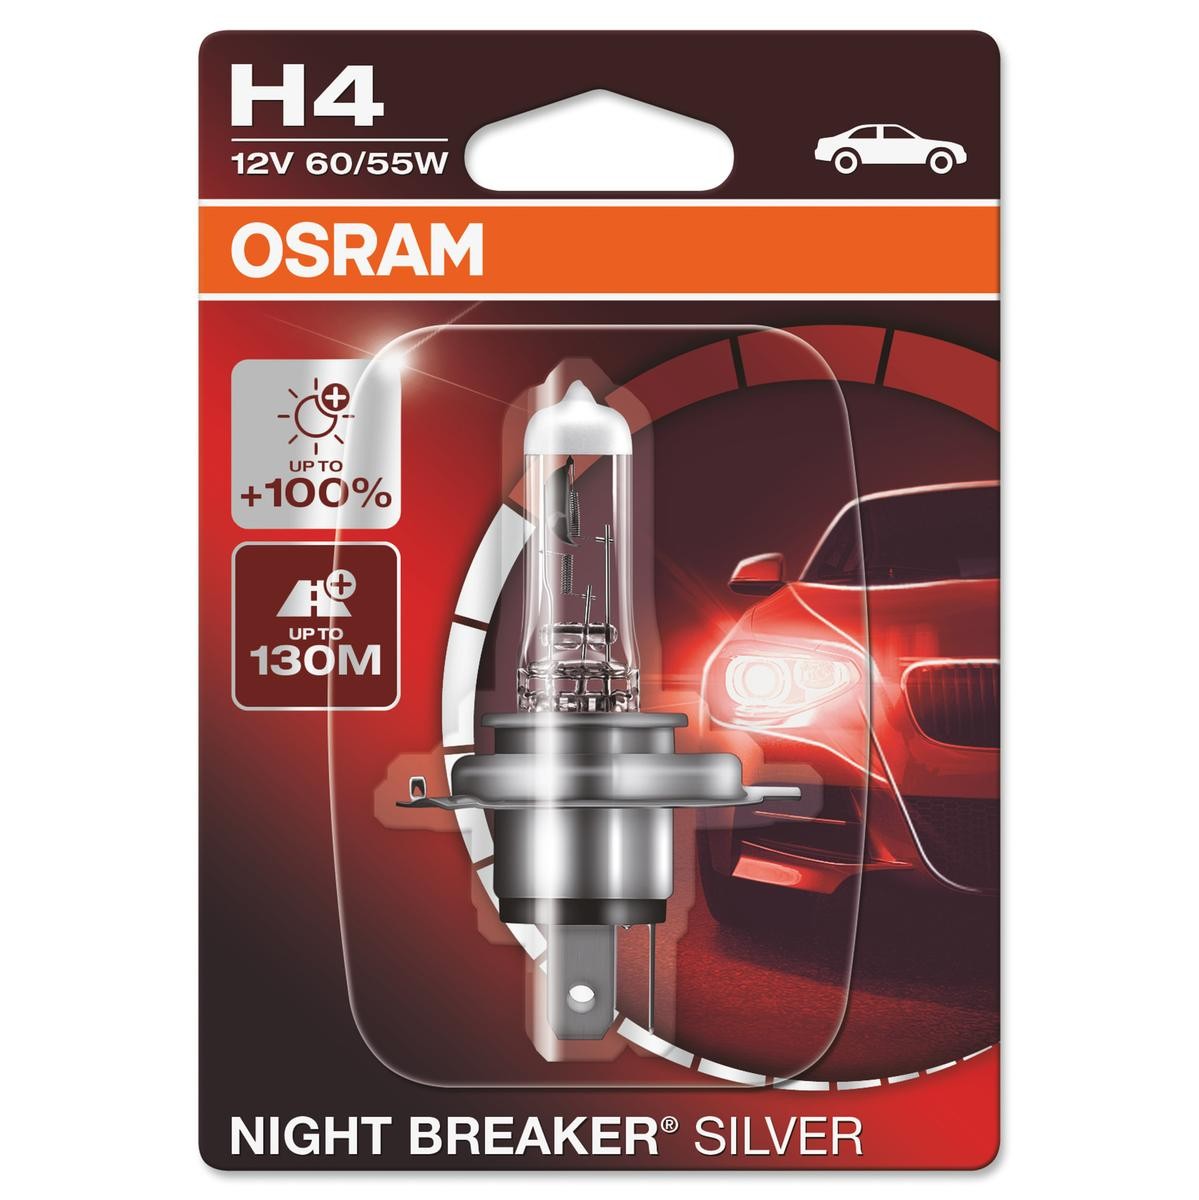 Comprar Bombillas LED OSRAM NIGHT BREAKER online - Asturxenon